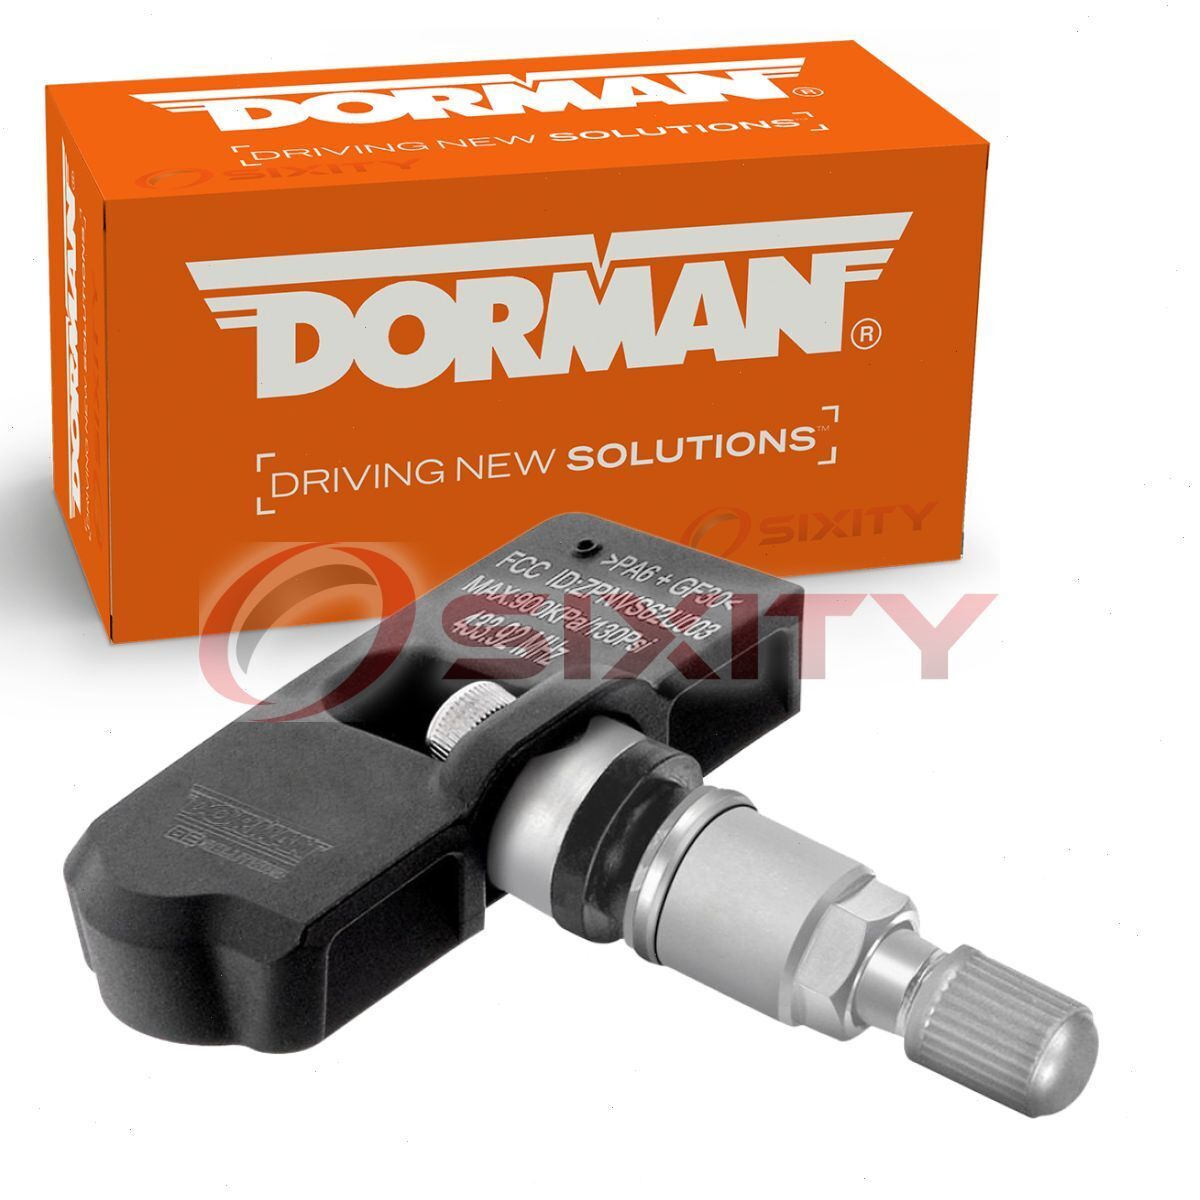 Dorman TPMS Programmable Sensor for 2002-2003 BMW 745i Tire Pressure rp